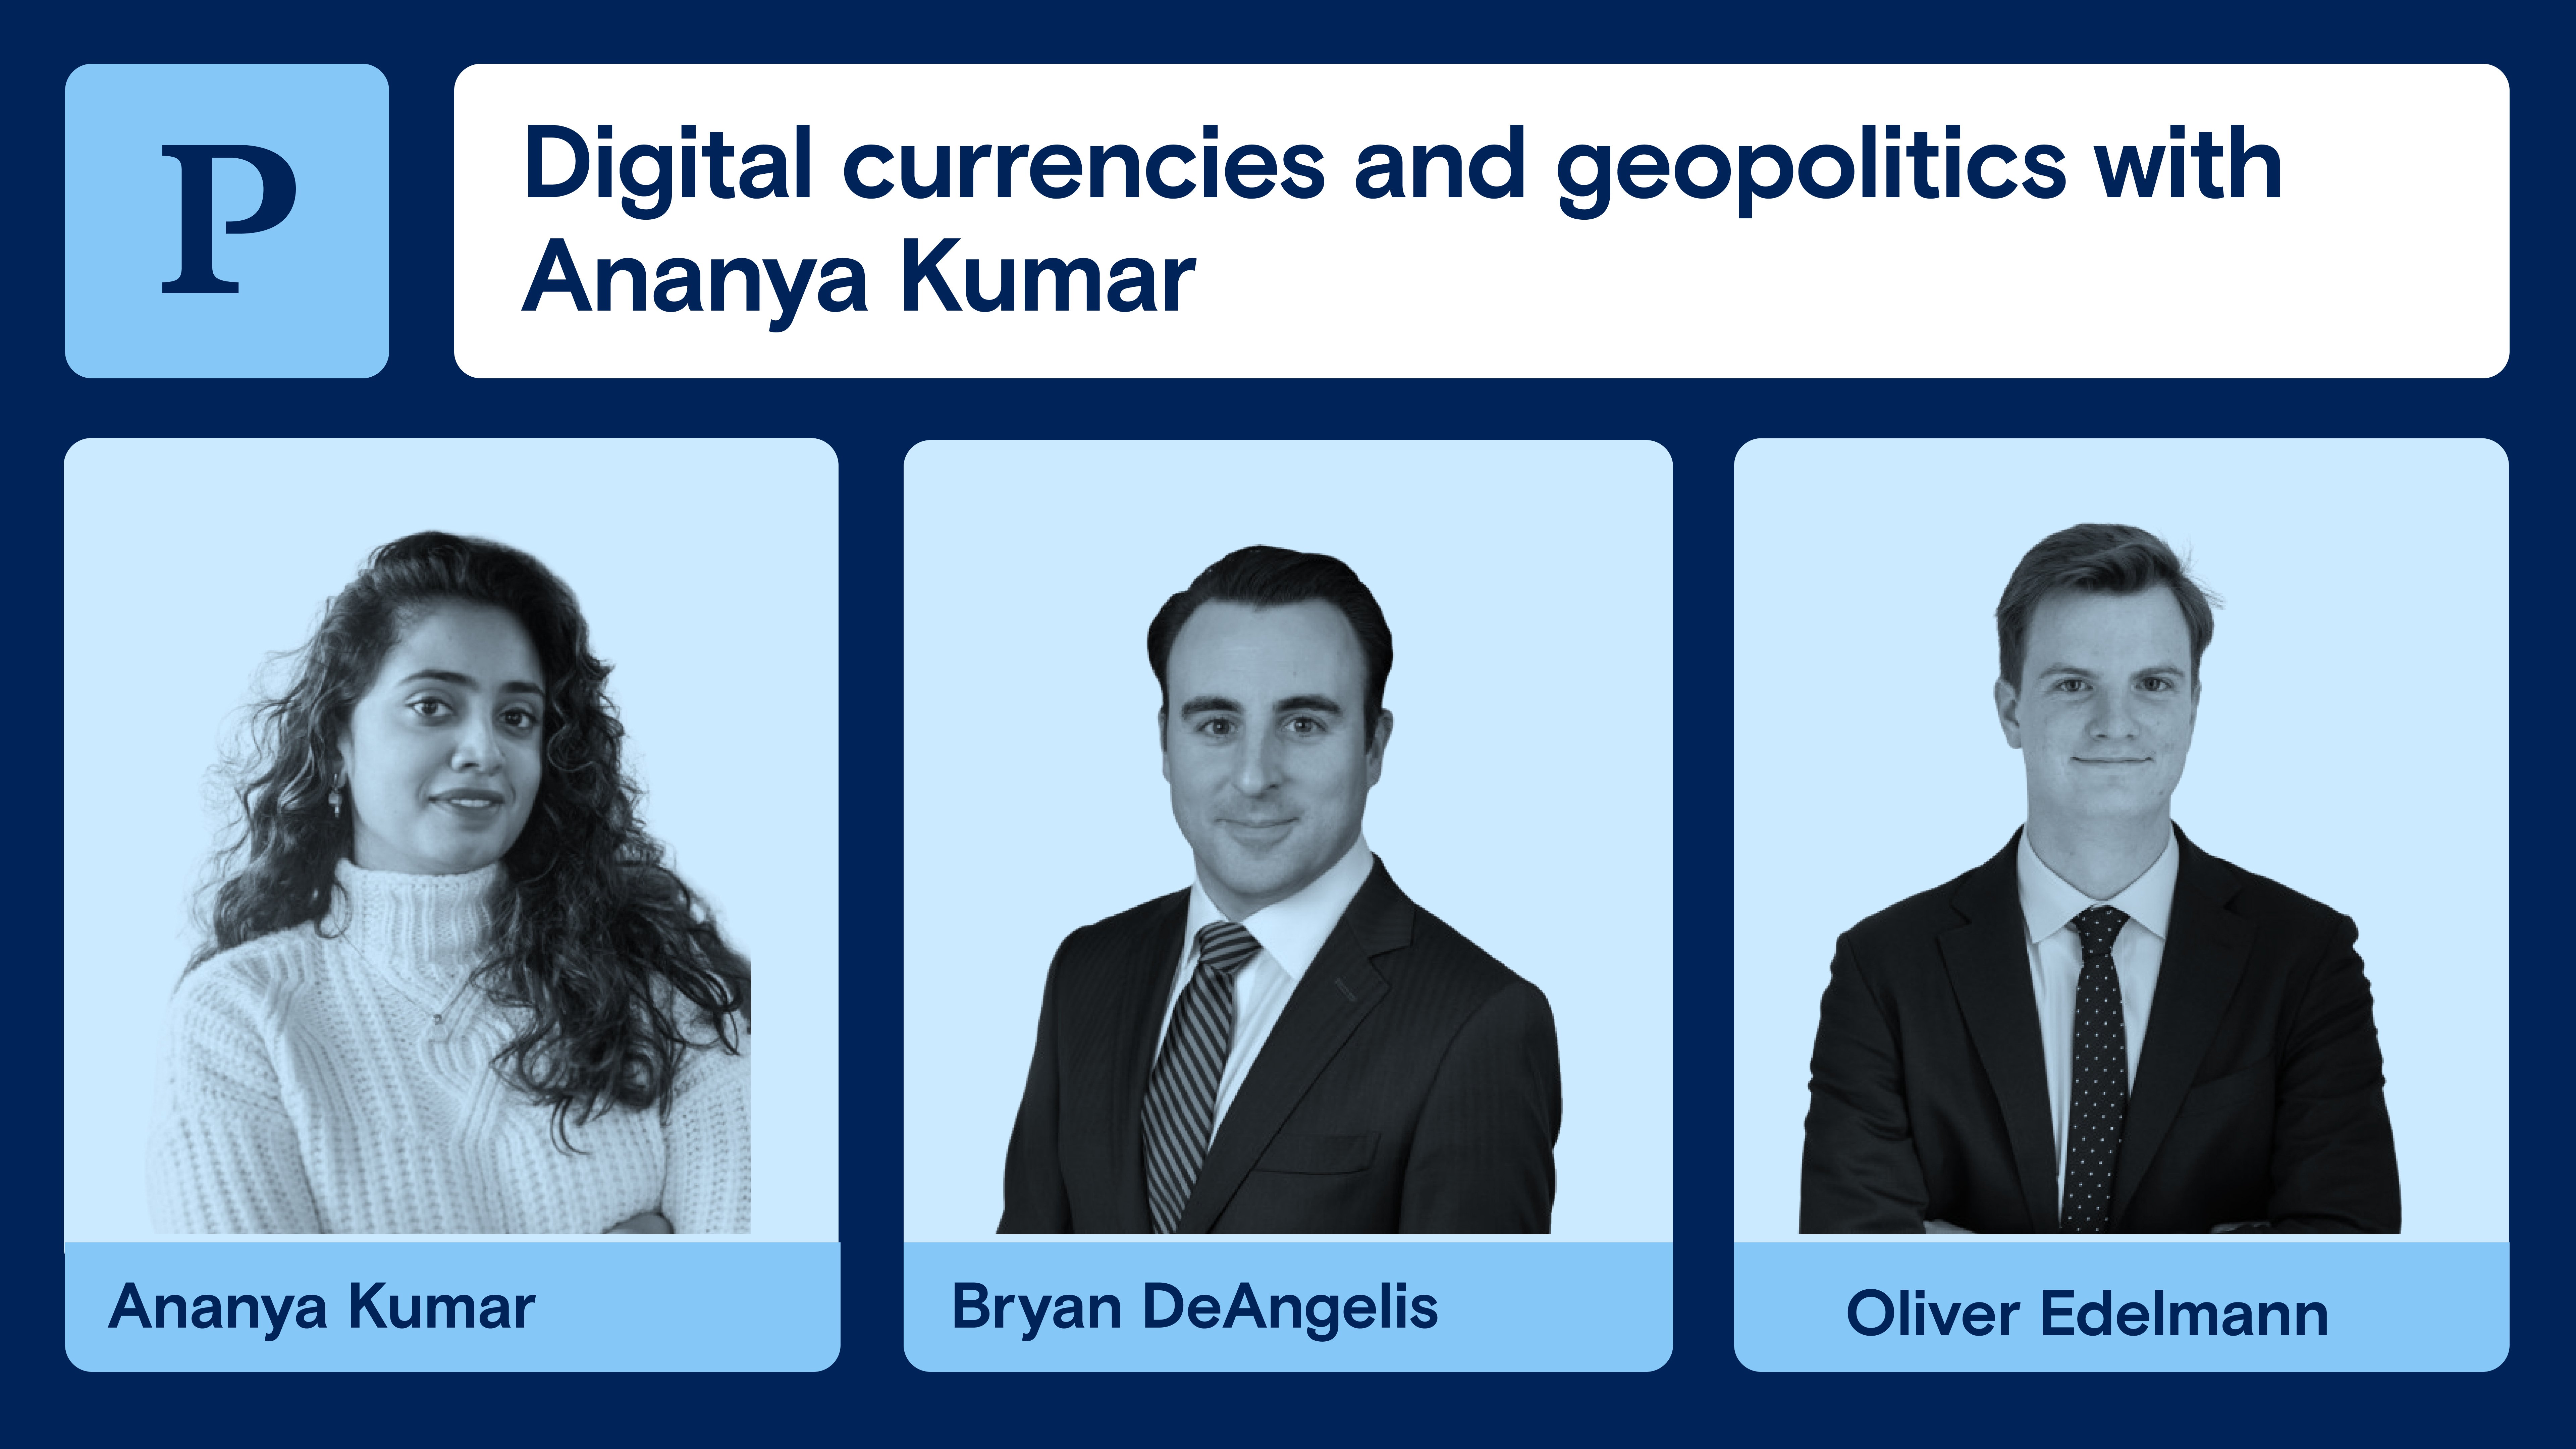 Digital currencies and geopolitics with Ananya Kumar